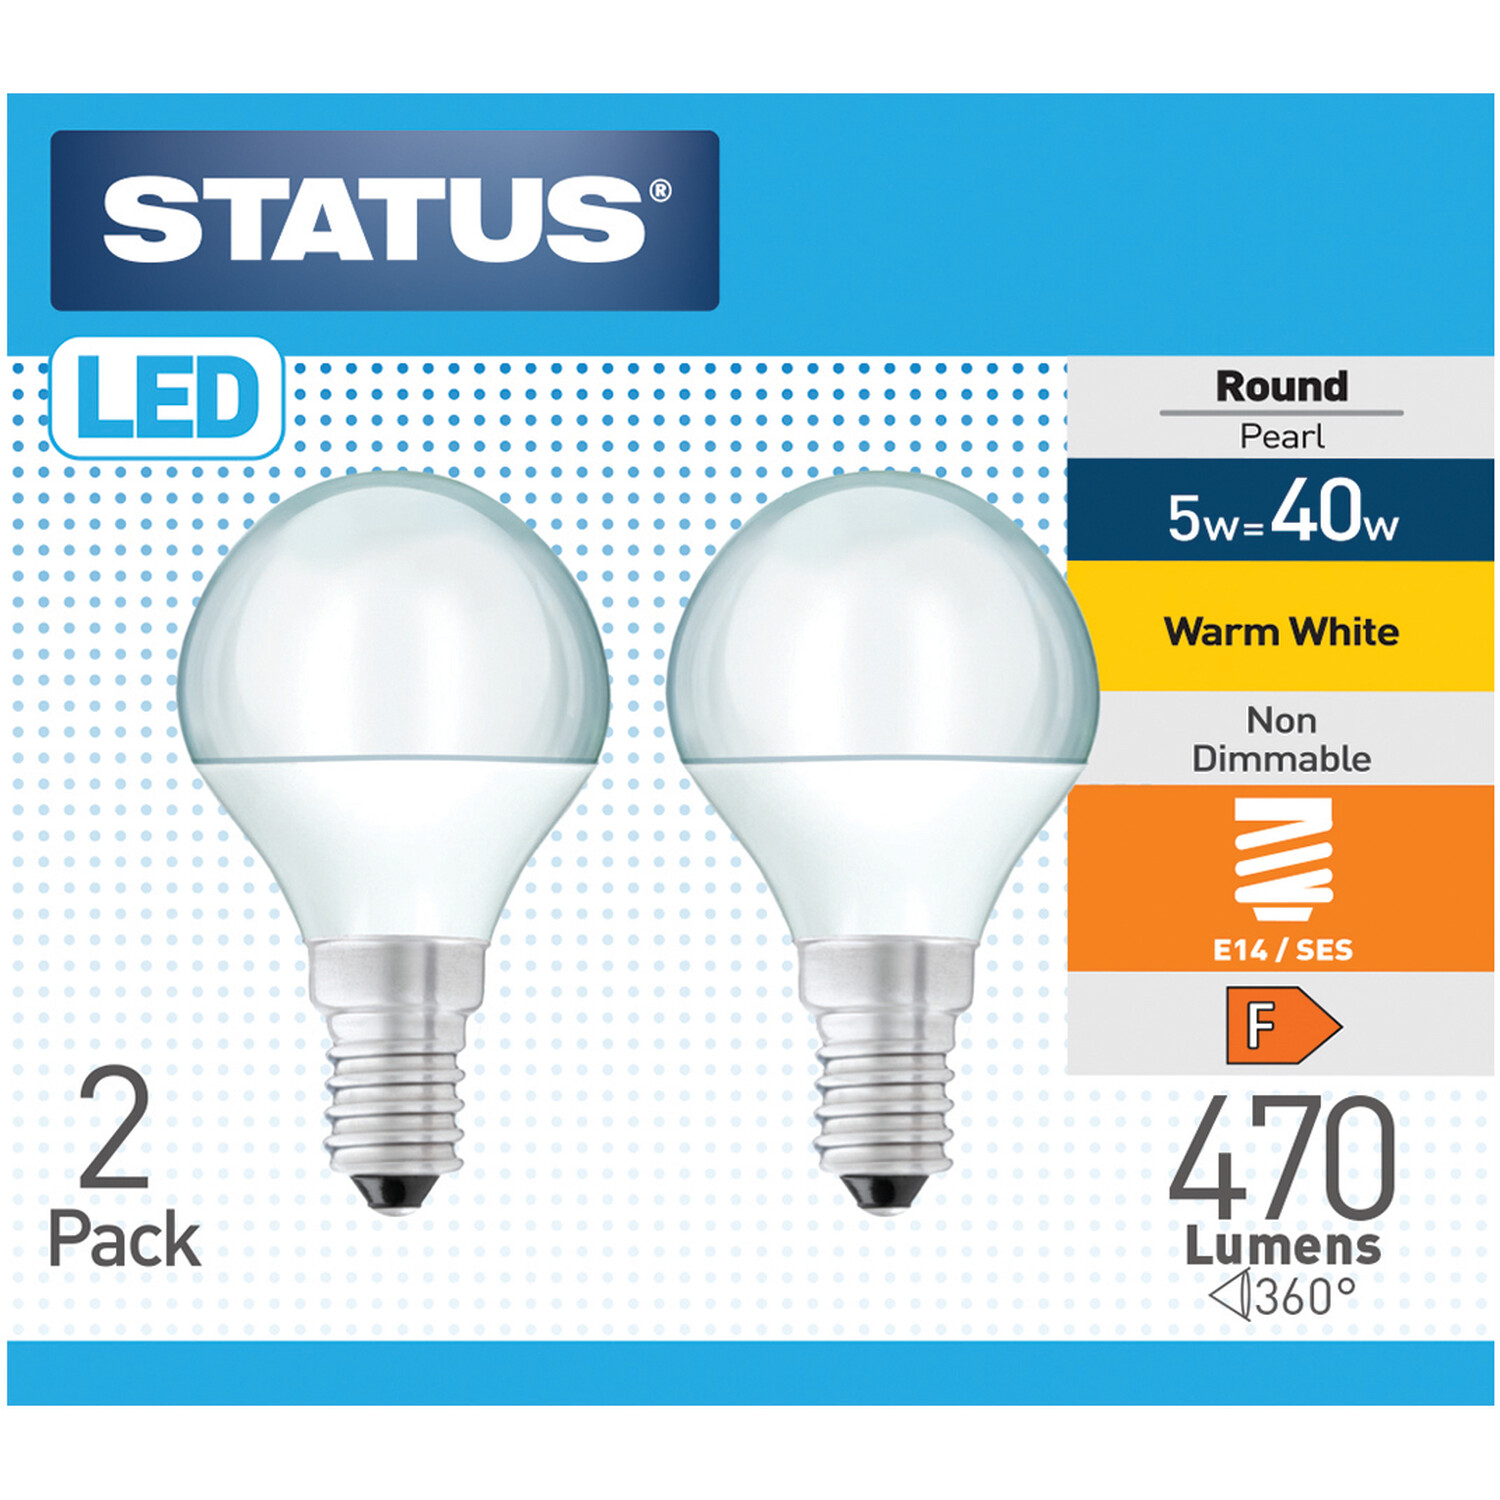 Pack of 2 Status LED 5W Round Pearl Lightbulbs Image 1